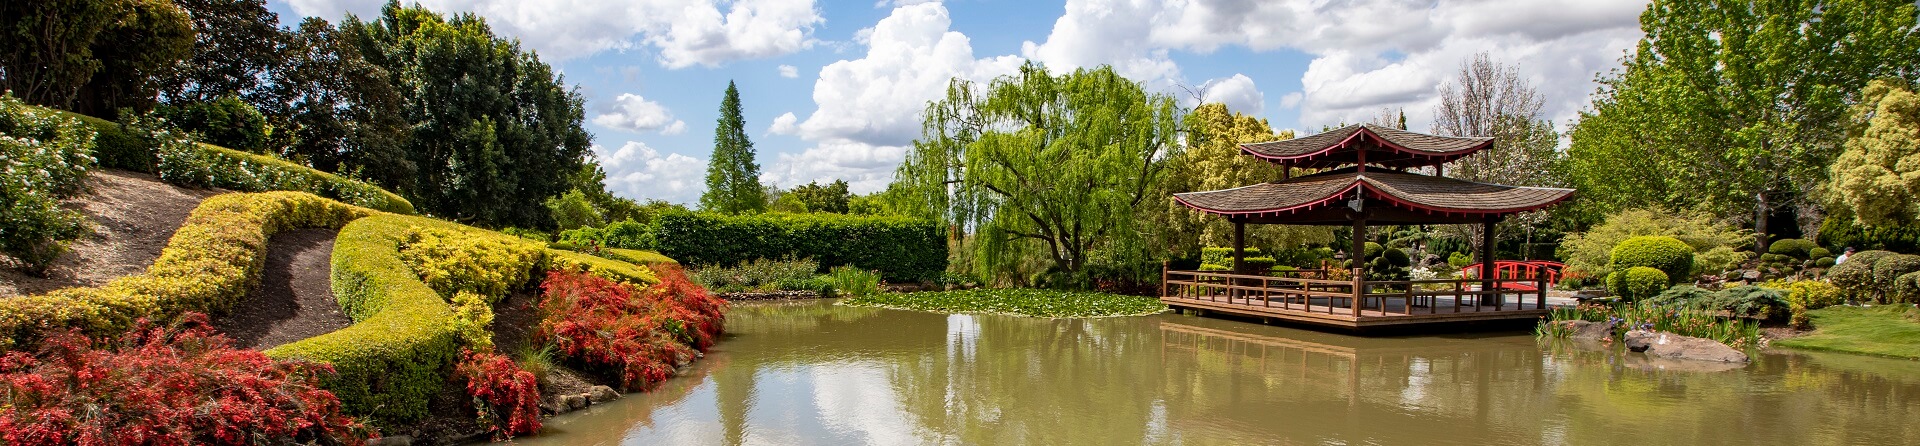 Is Hunter Valley Gardens worth visiting?